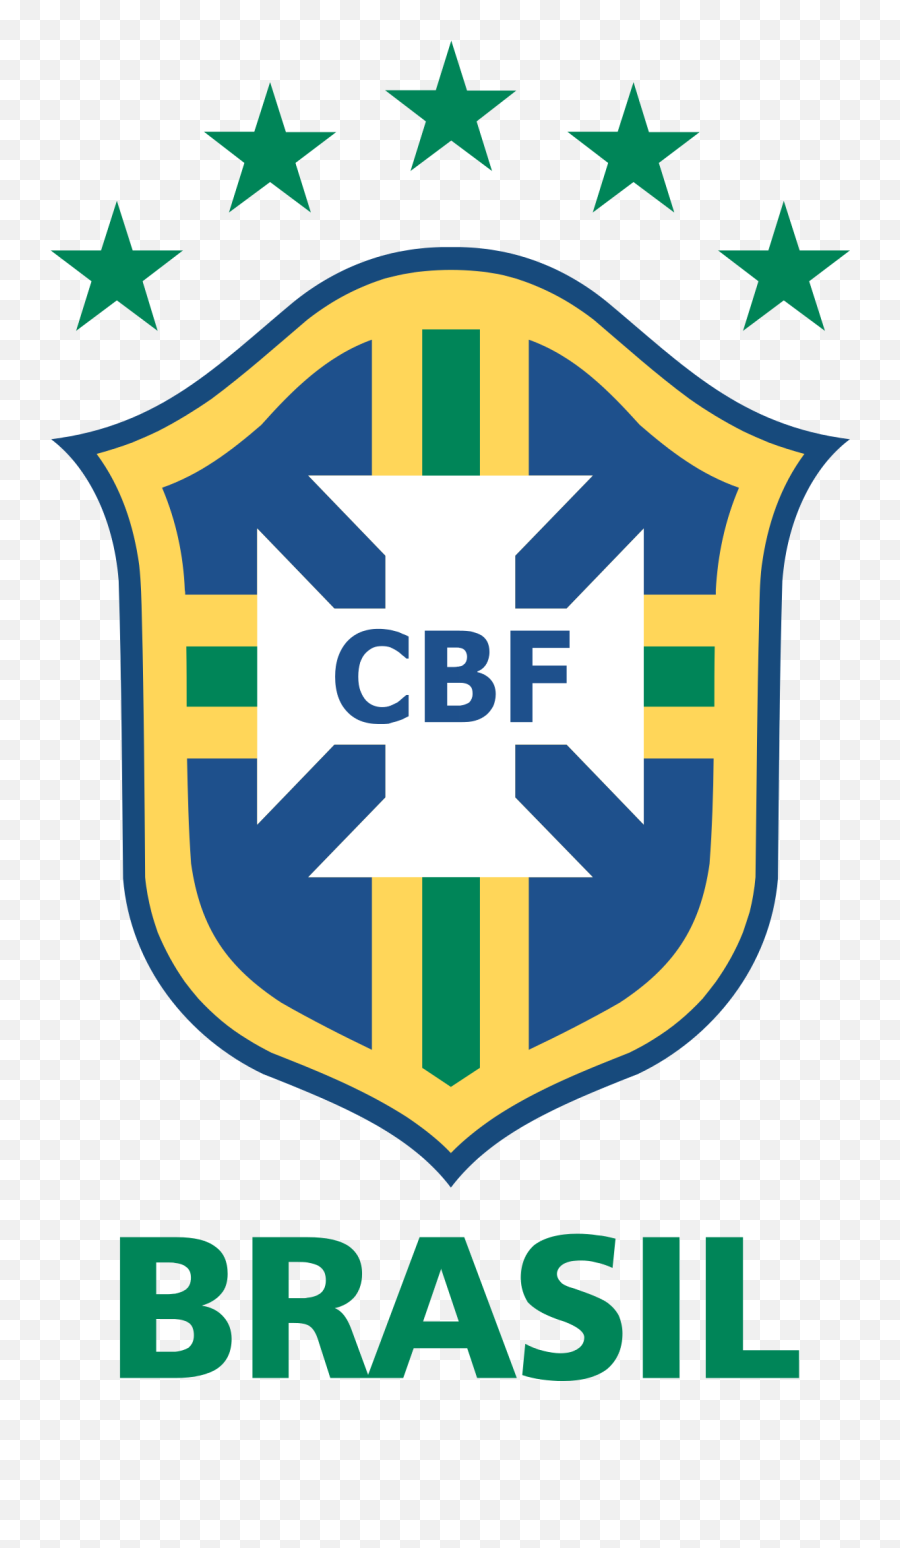 Football Manager Mobile 2019 - Brazilu0027s World Cup Dream Brazil National Football Team Emoji,World Cup Emoji